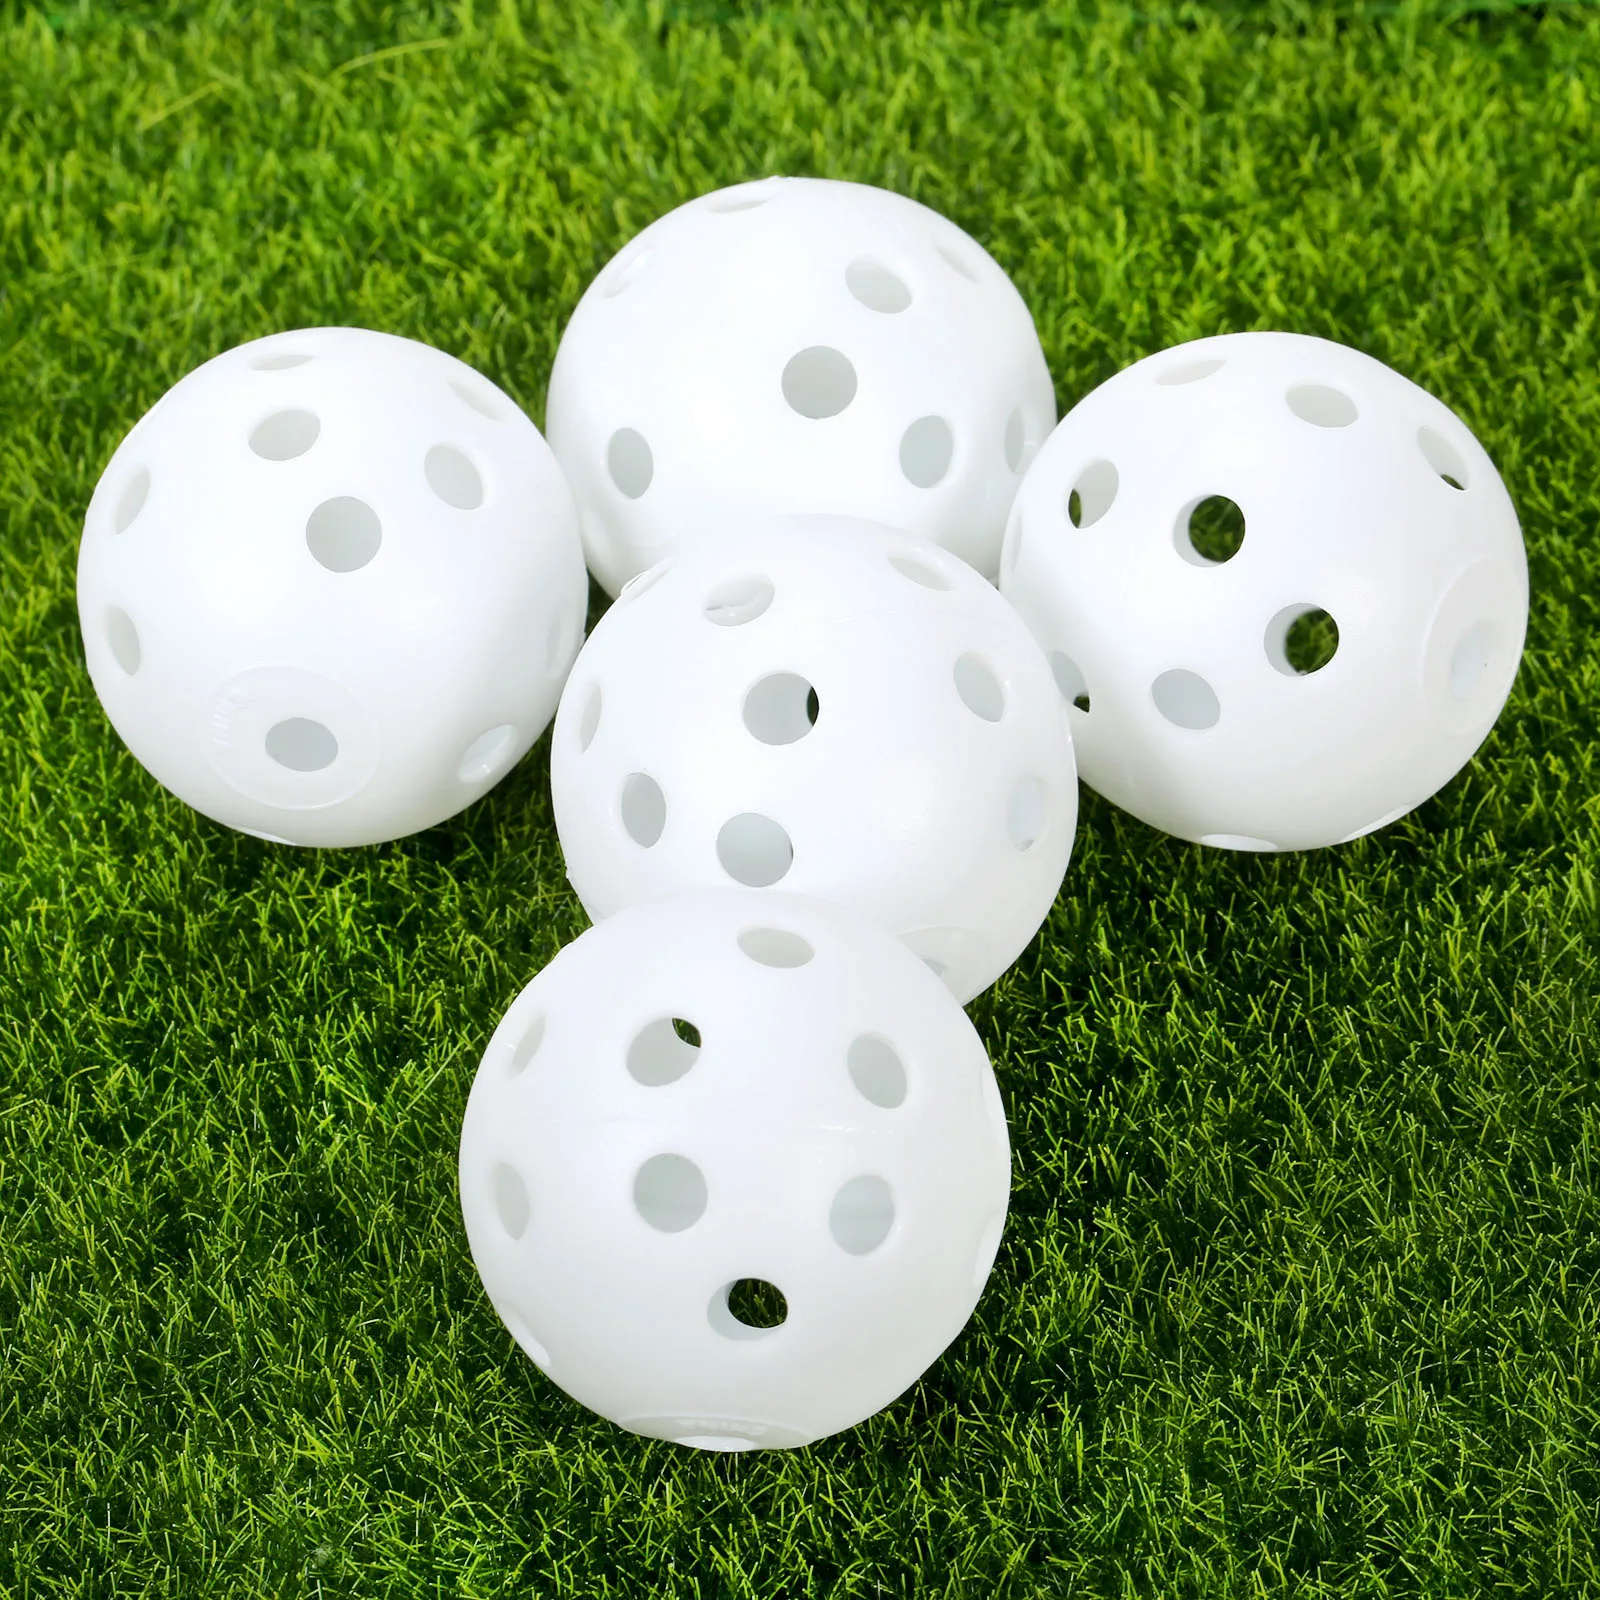 

50PCS/lot Plastic Hole Airflow Hollow Golf Balls 41mm Golfer Golf Practice Balls Golf Training Accessories Random Color